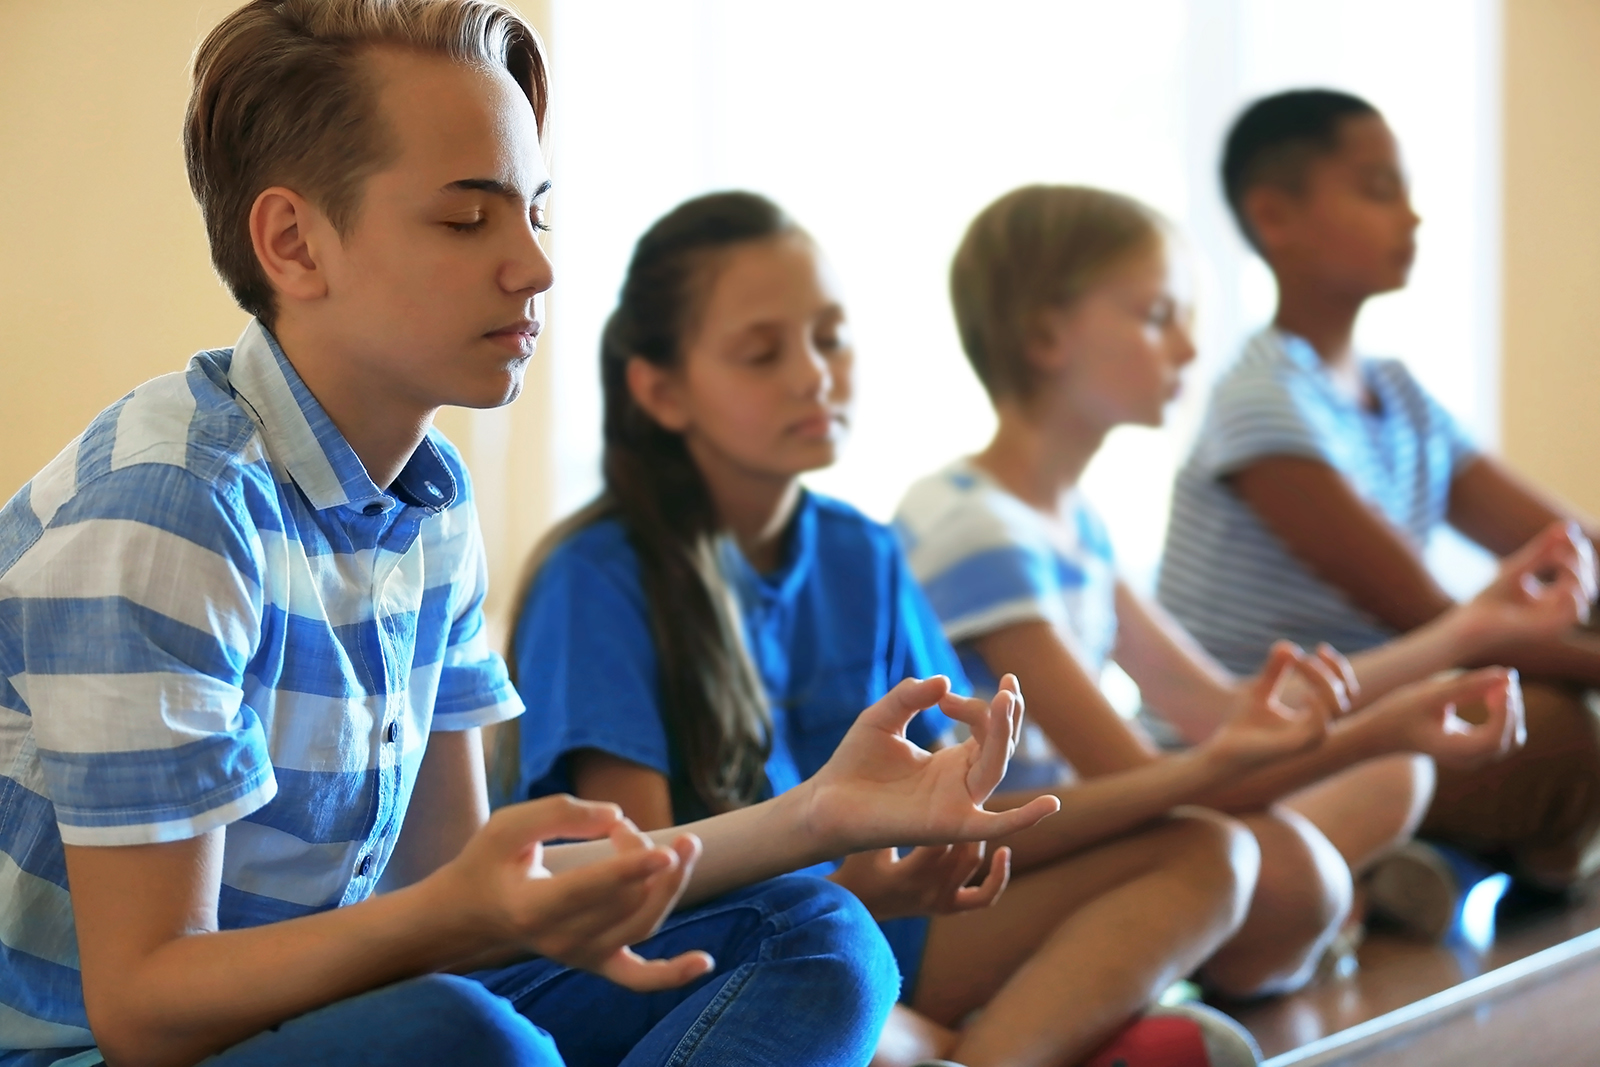 Yoga classes are more and more popular in American schools.  Afrique Studio via www.shutterstock.com